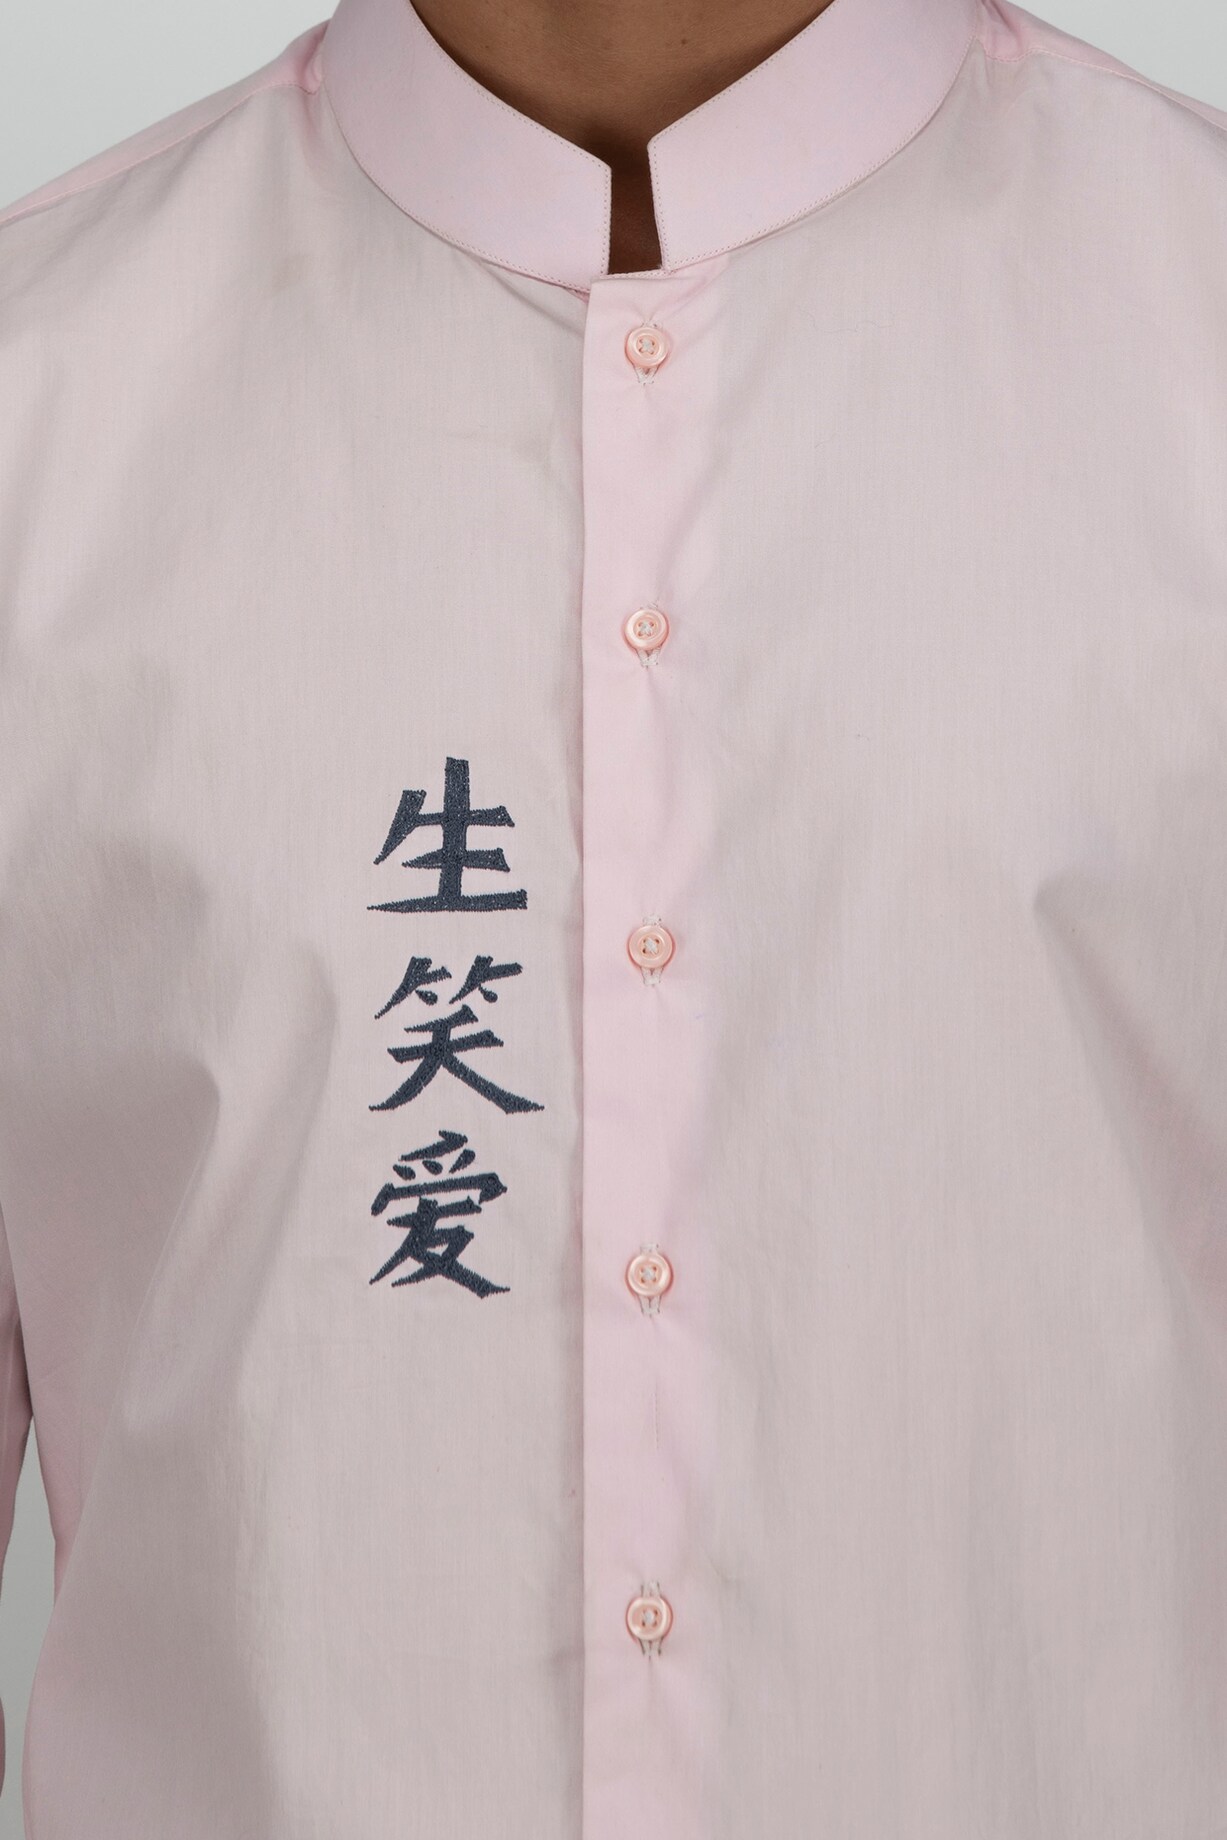 Light Pink Cotton Shirt by Armen & Co